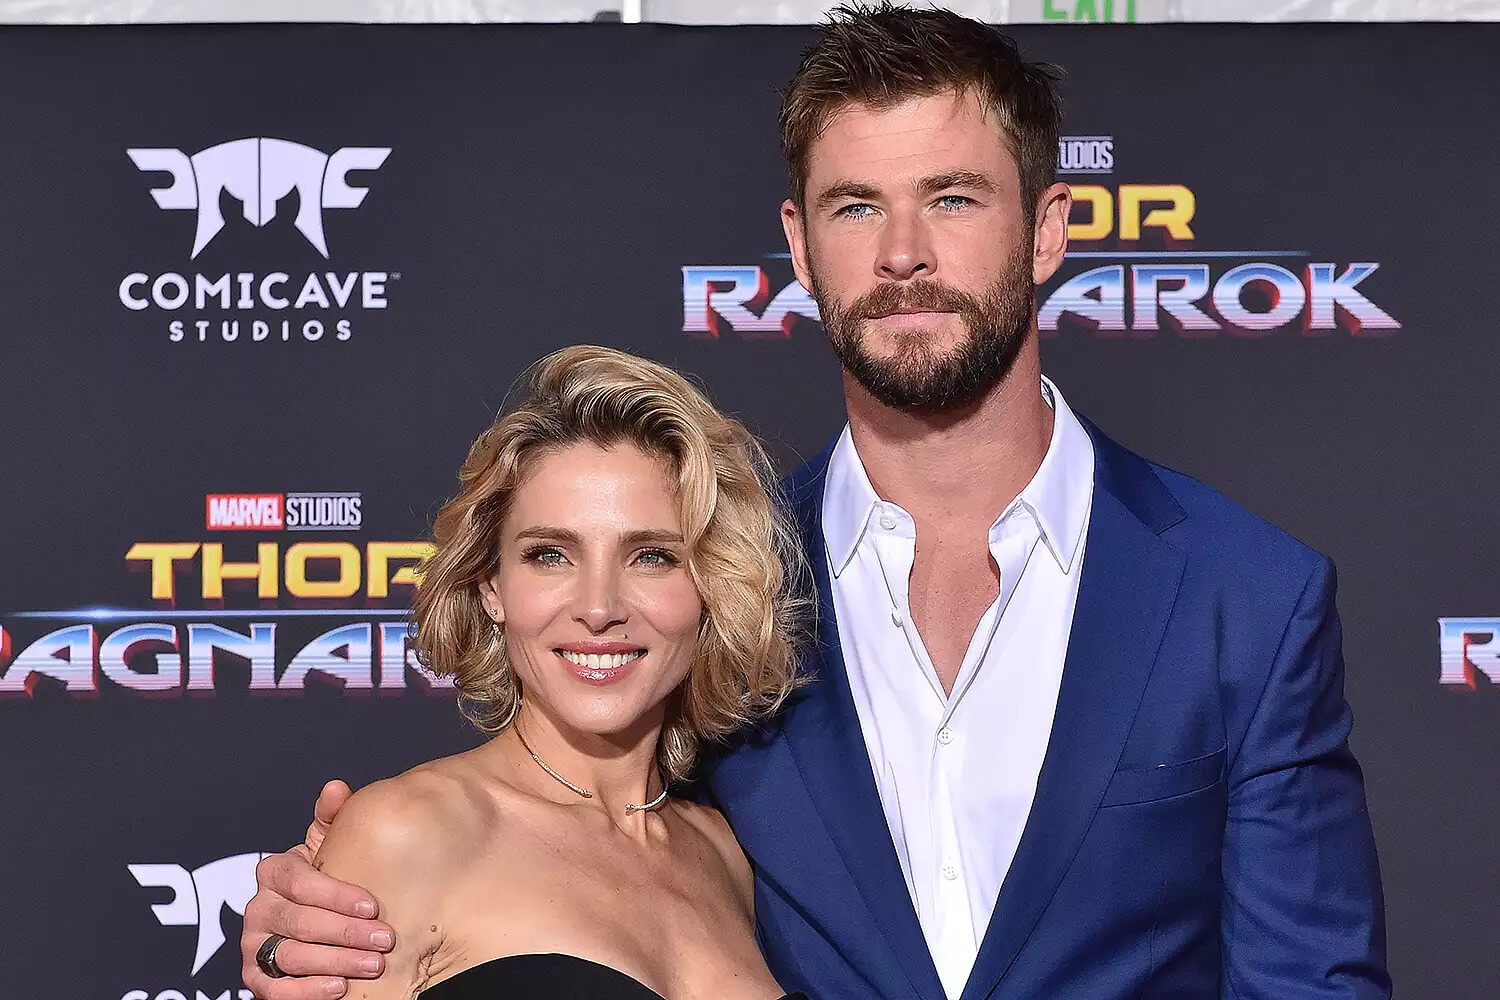 Chris Hemsworth and Elsa Pataky at the premiere of Thor: Ragnarok